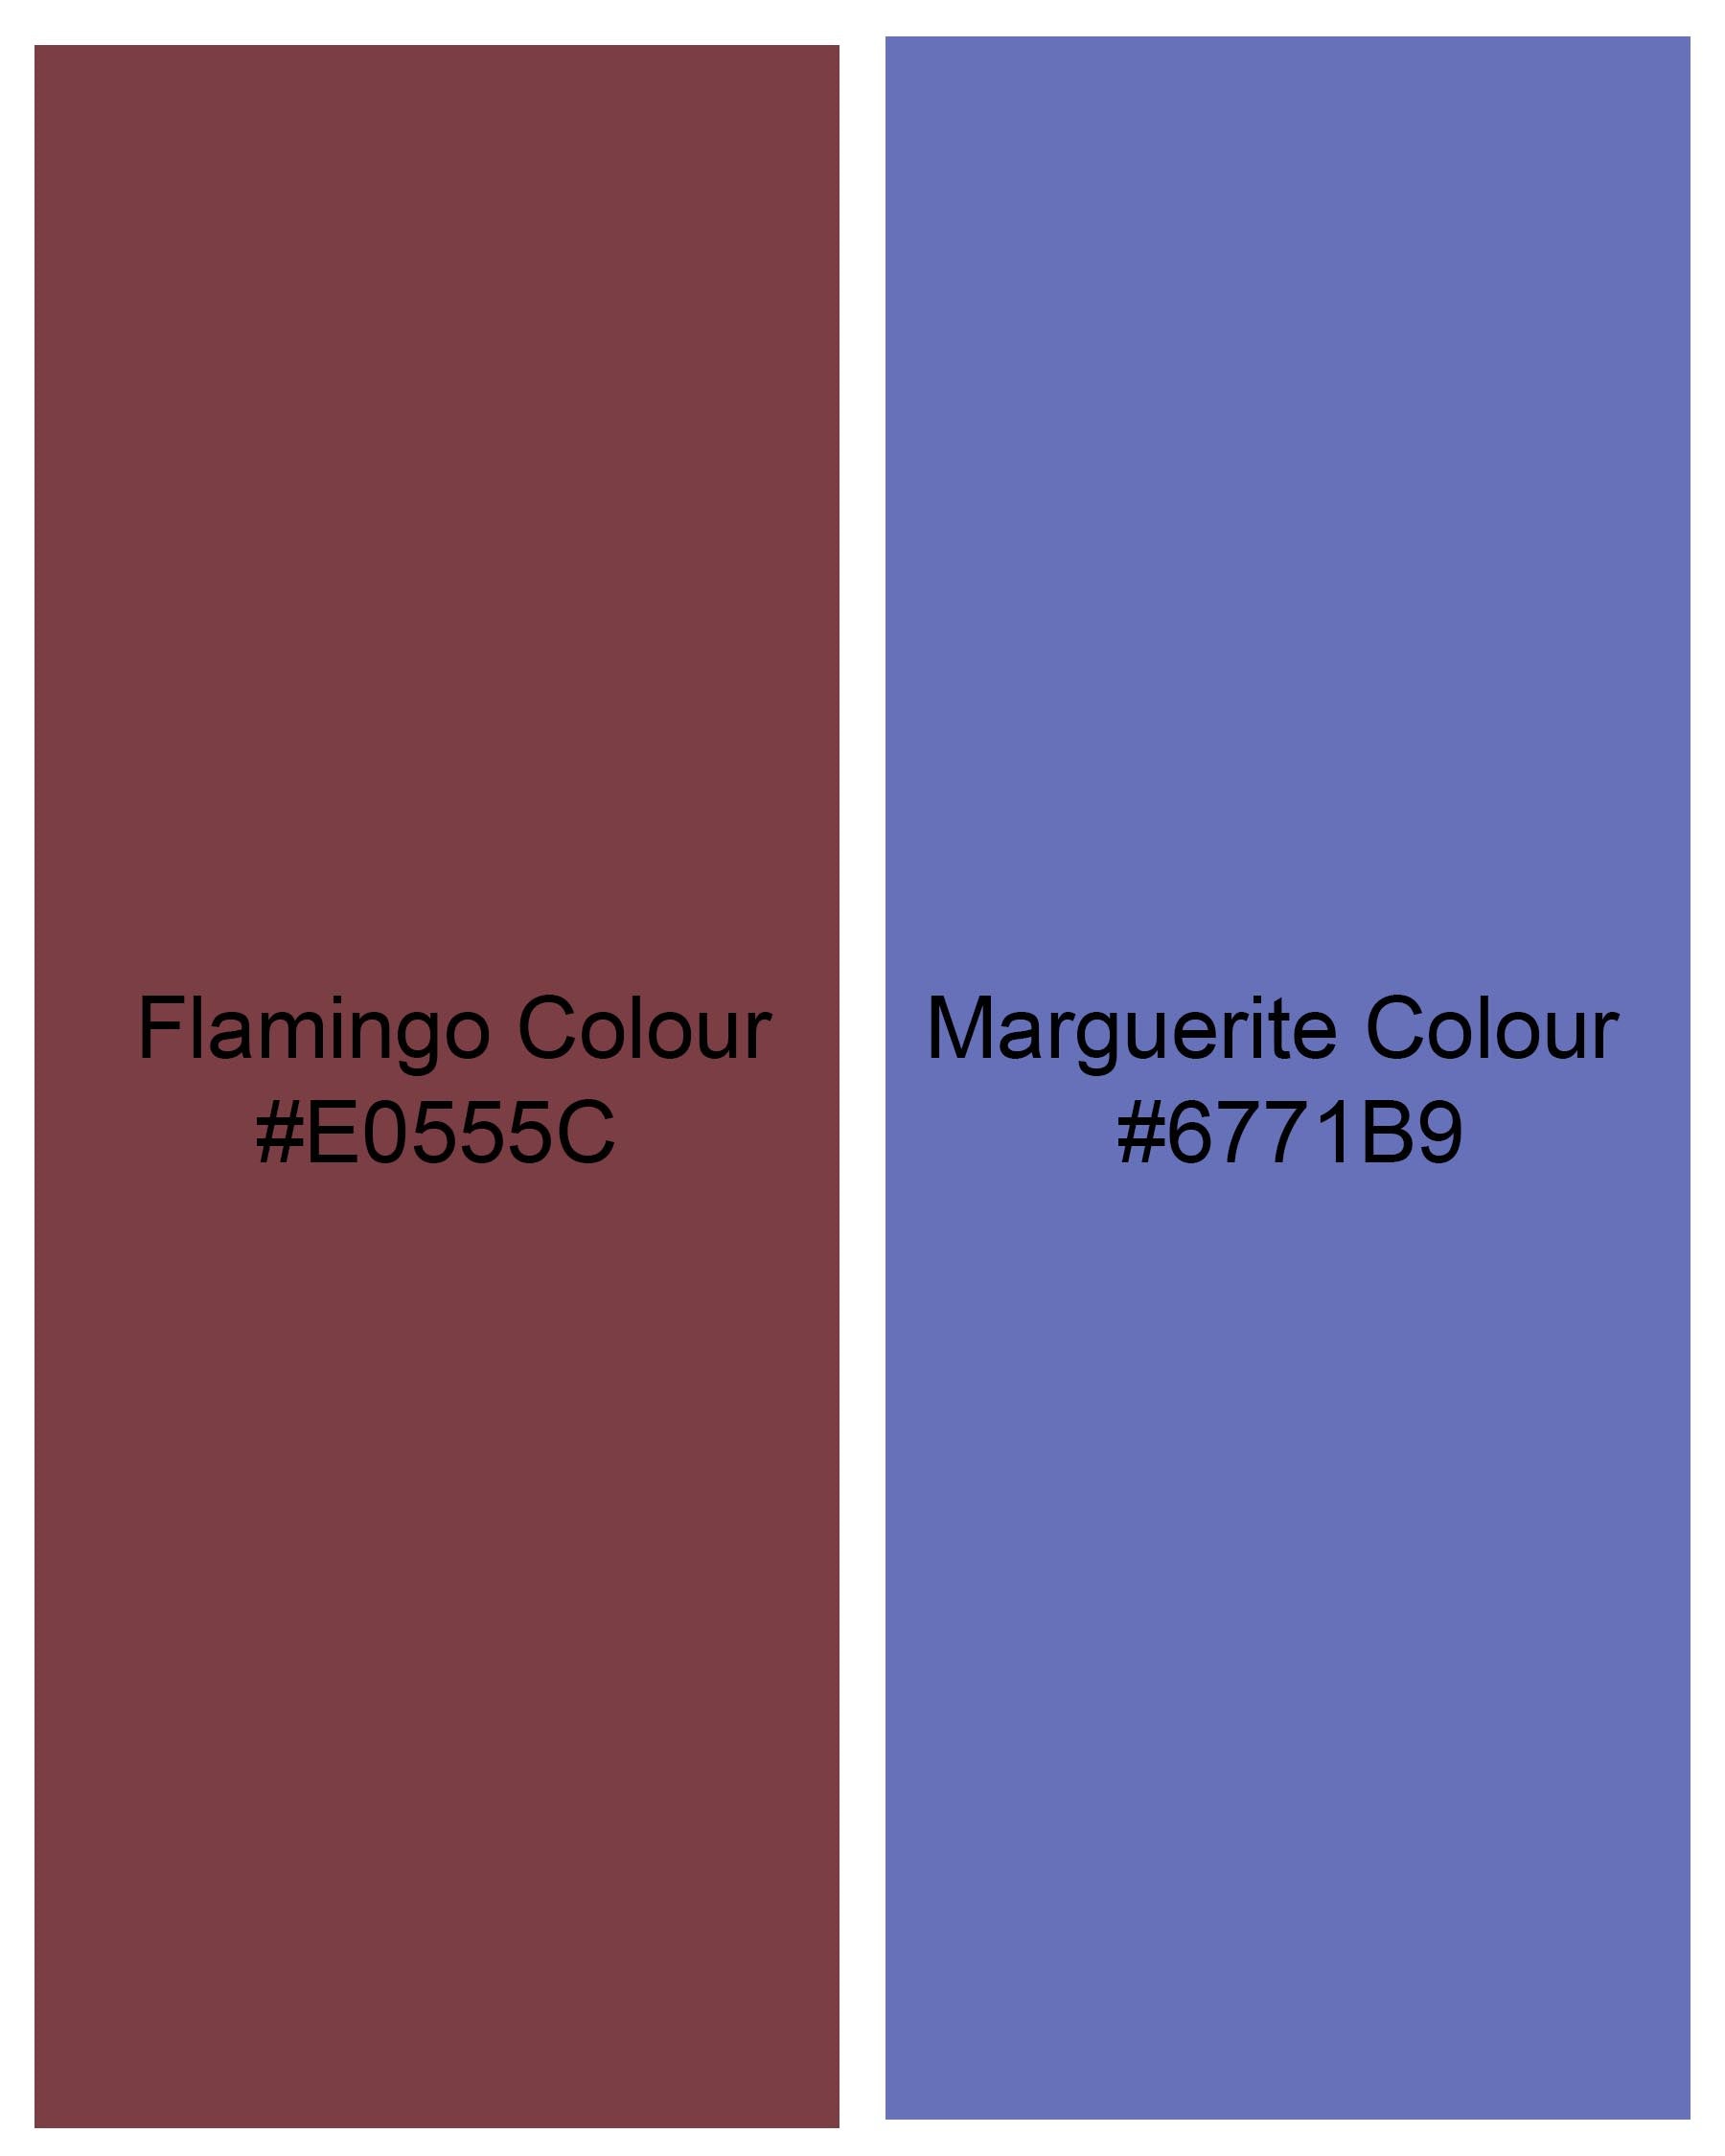 Marguerite Blue and Flamingo Brown Dobby Textured Premium Giza Cotton Designer Shirt 7795-P146-38, 7795-P146-H-38, 7795-P146-39,7795-P146-H-39, 7795-P146-40, 7795-P146-H-40, 7795-P146-42, 7795-P146-H-42, 7795-P146-44, 7795-P146-H-44, 7795-P146-46, 7795-P146-H-46, 7795-P146-48, 7795-P146-H-48, 7795-P146-50, 7795-P146-H-50, 7795-P146-52, 7795-P146-H-52